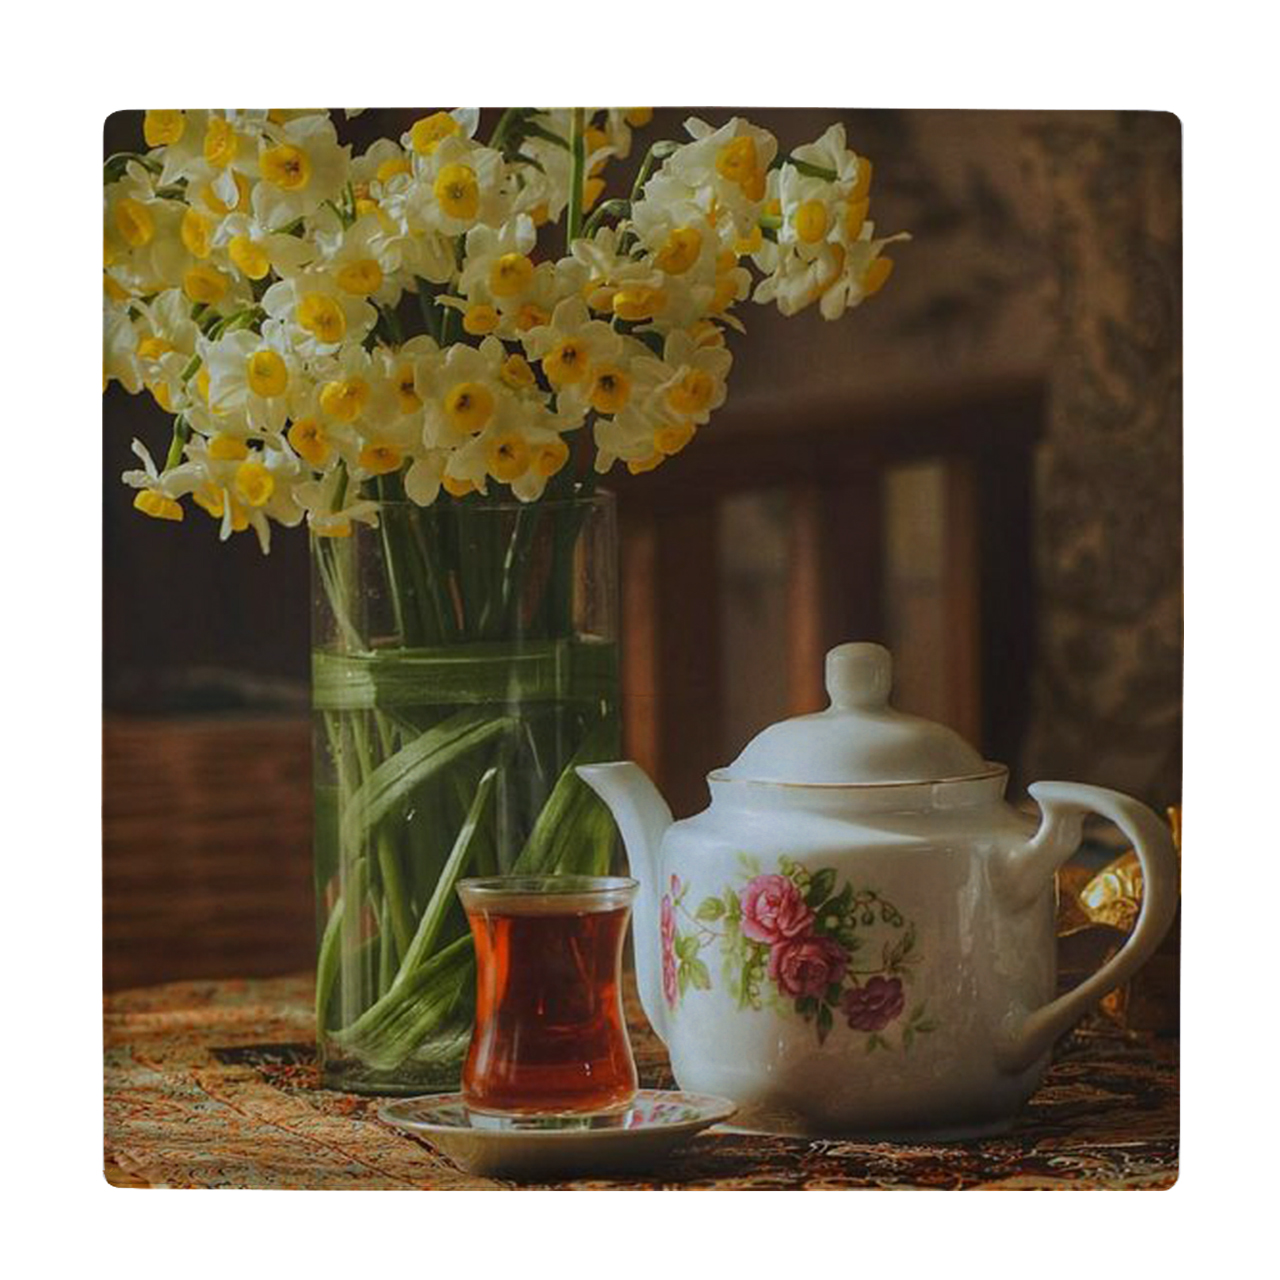  کاشی کارنیلا طرح قوری و استکان چایی و گلهای نرگس مدل لوحی کد klh2464 